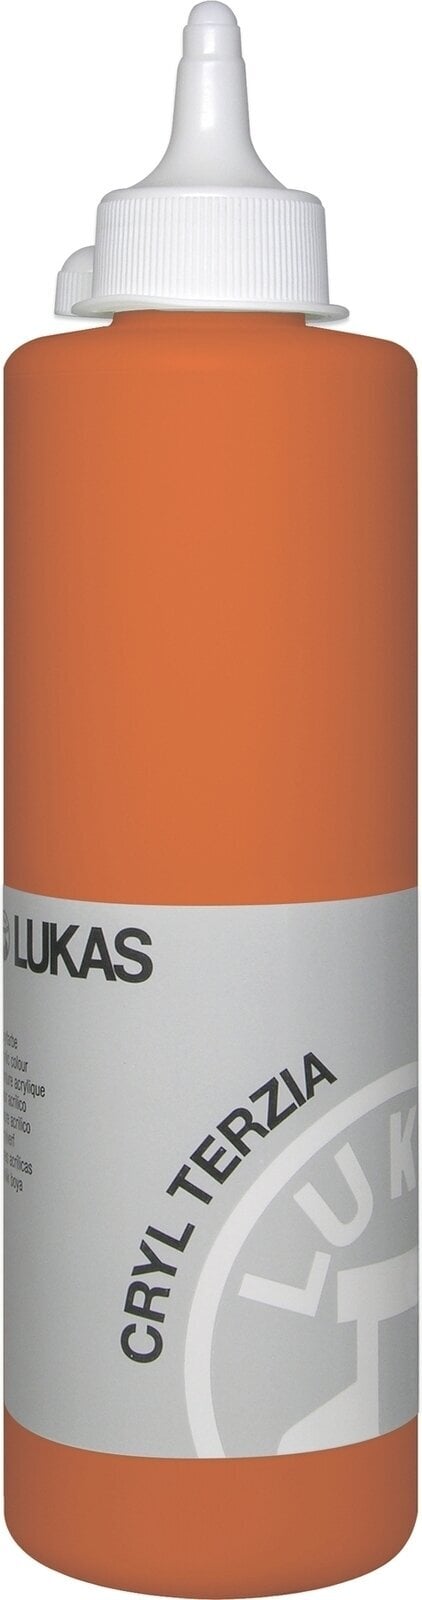 Tinta acrílica Lukas Cryl Terzia Tinta acrílica 500 ml Cadmium Orange Hue